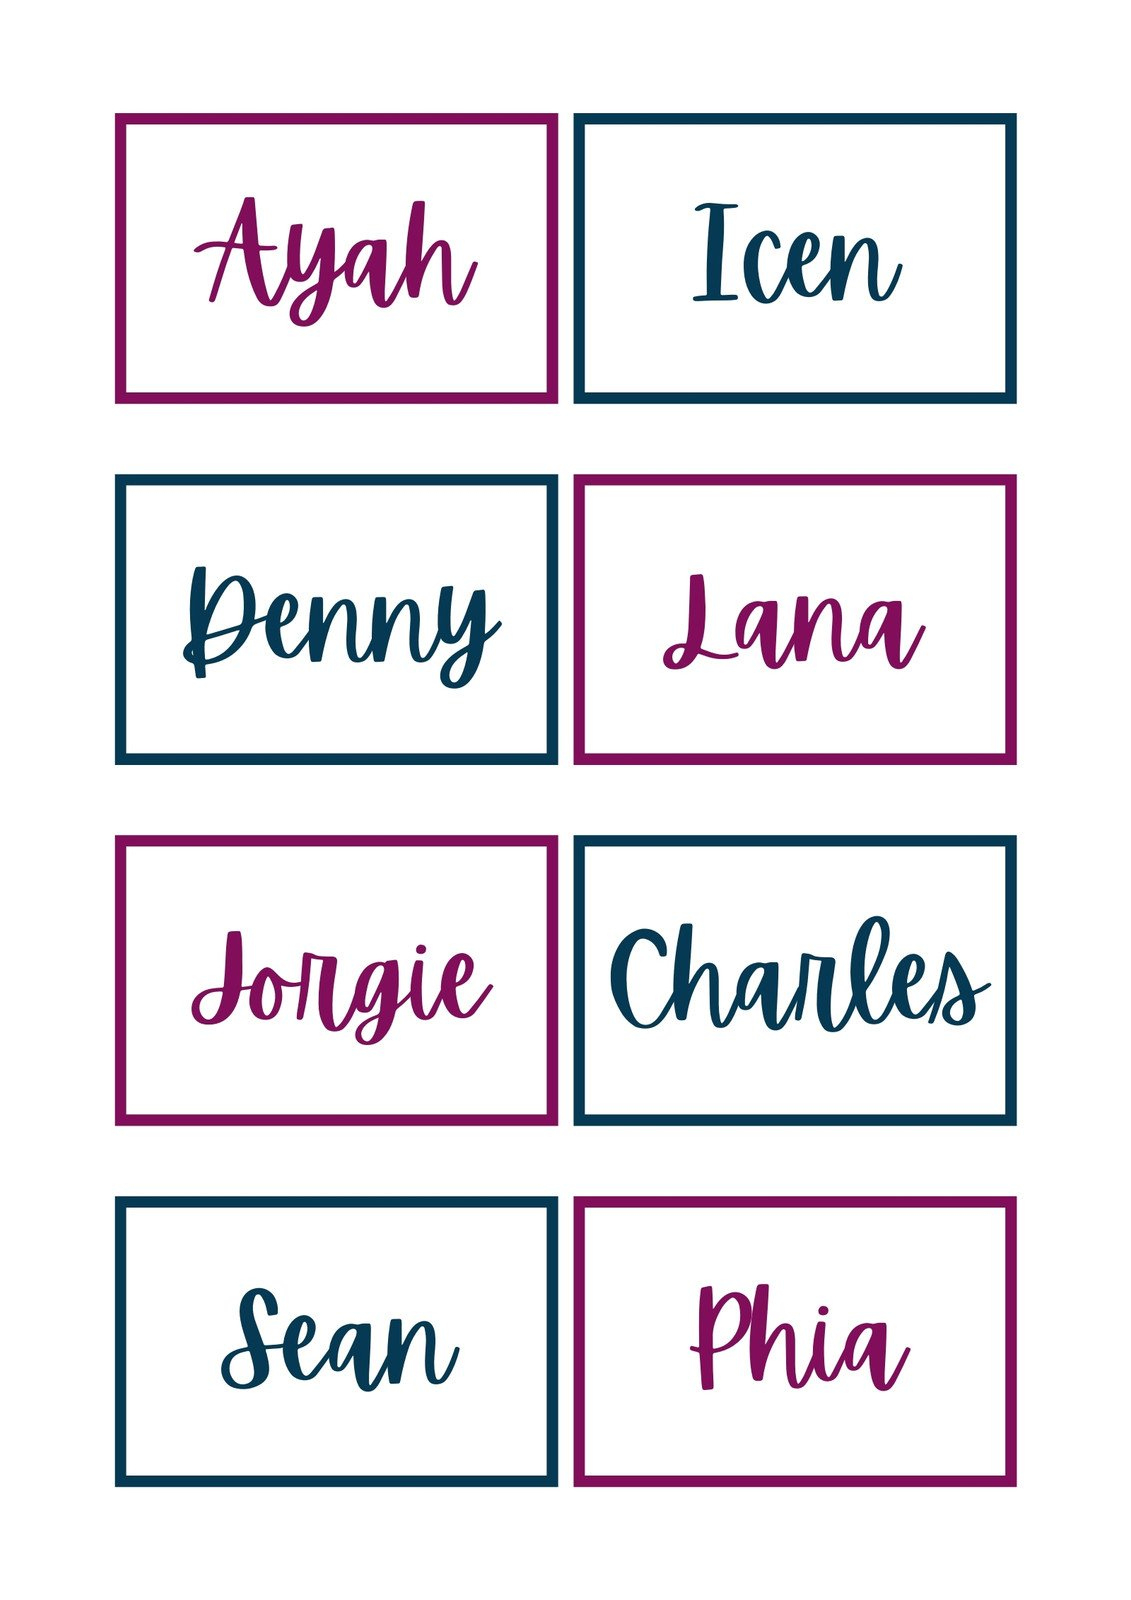 Free, Printable, Customizable Name Tag Templates | Canva regarding Free Printable Name Labels For Kids